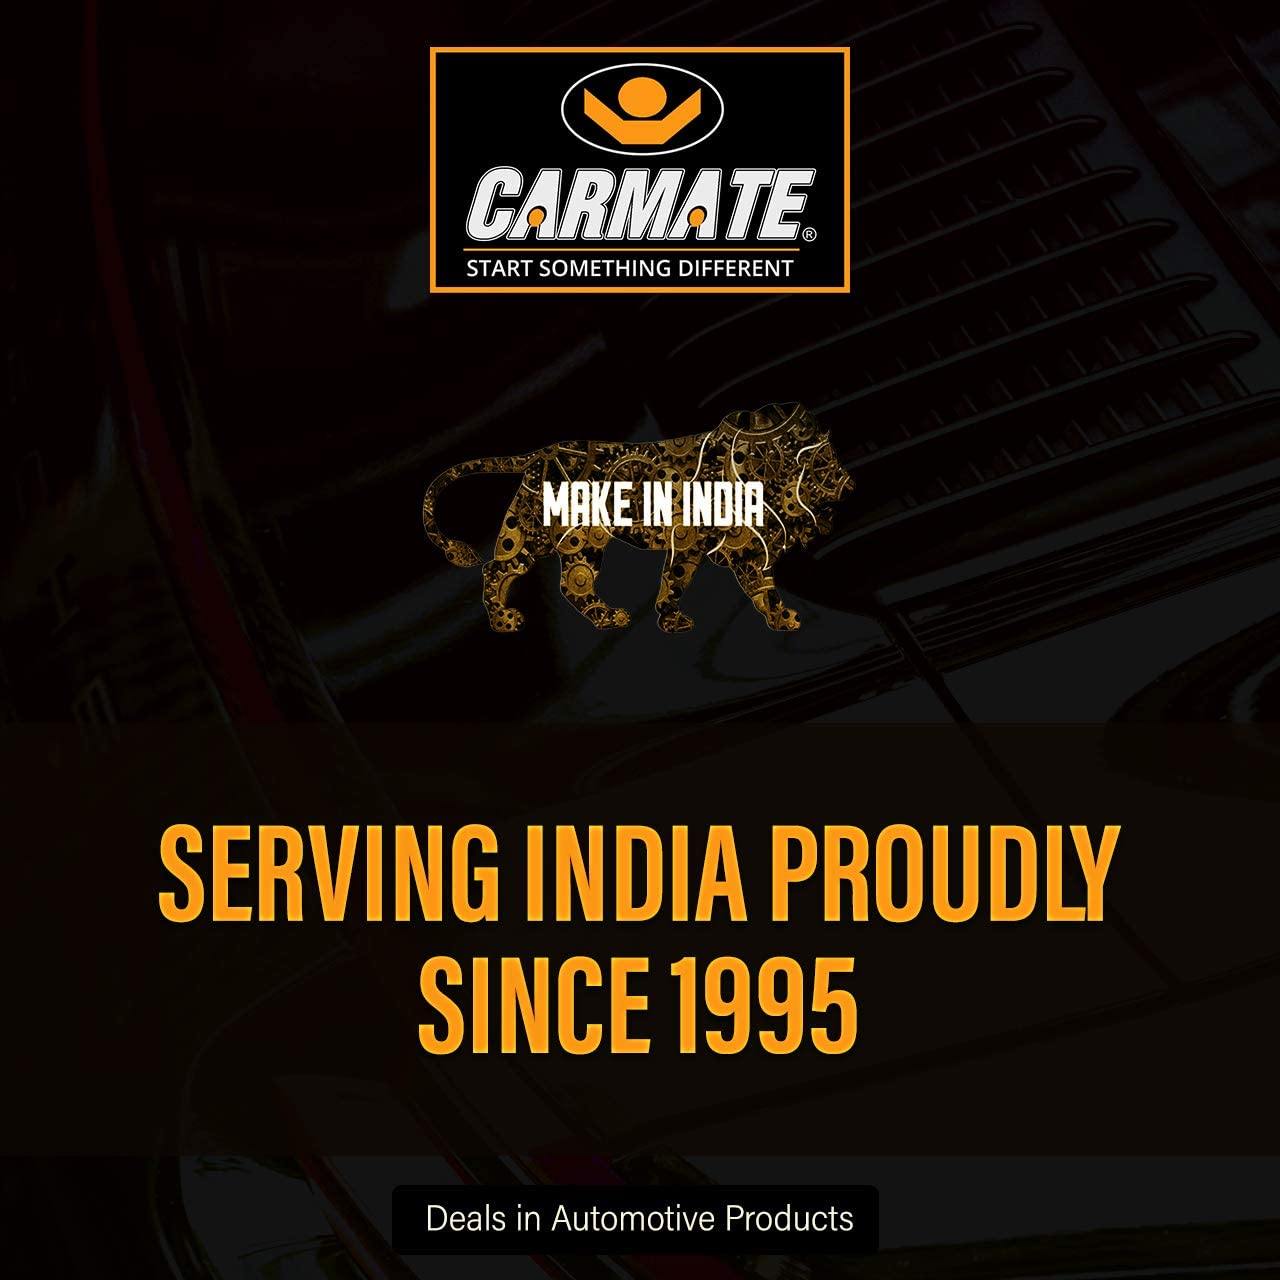 Carmate Passion Car Body Cover (Black and Orange) for Hyundai - Accent - CARMATE®